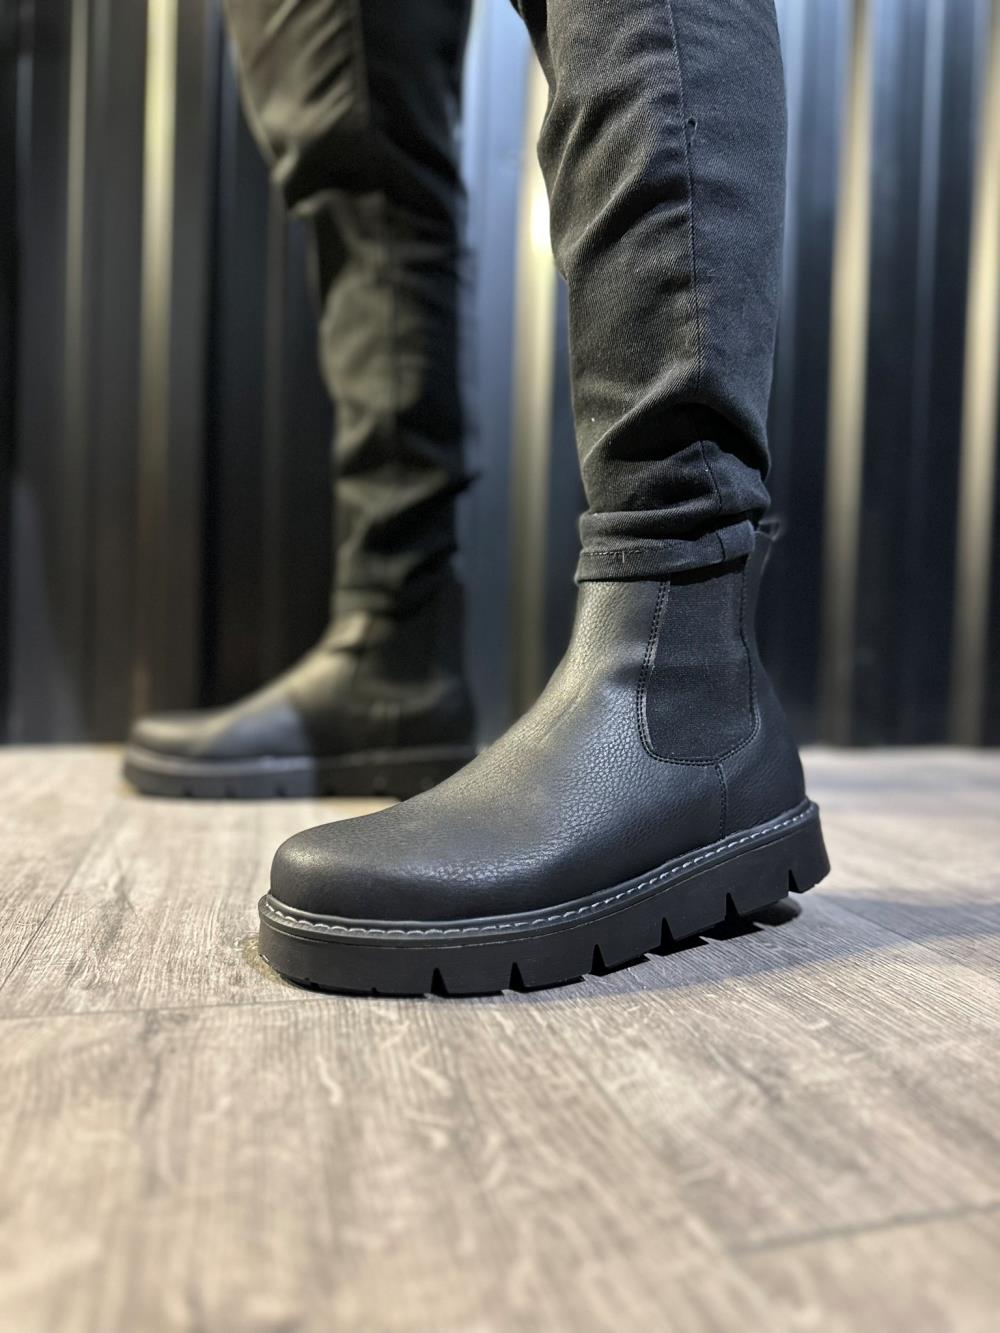 Men's High Heel Chelsea Boots 112 Black (Black Sole) - STREETMODE ™